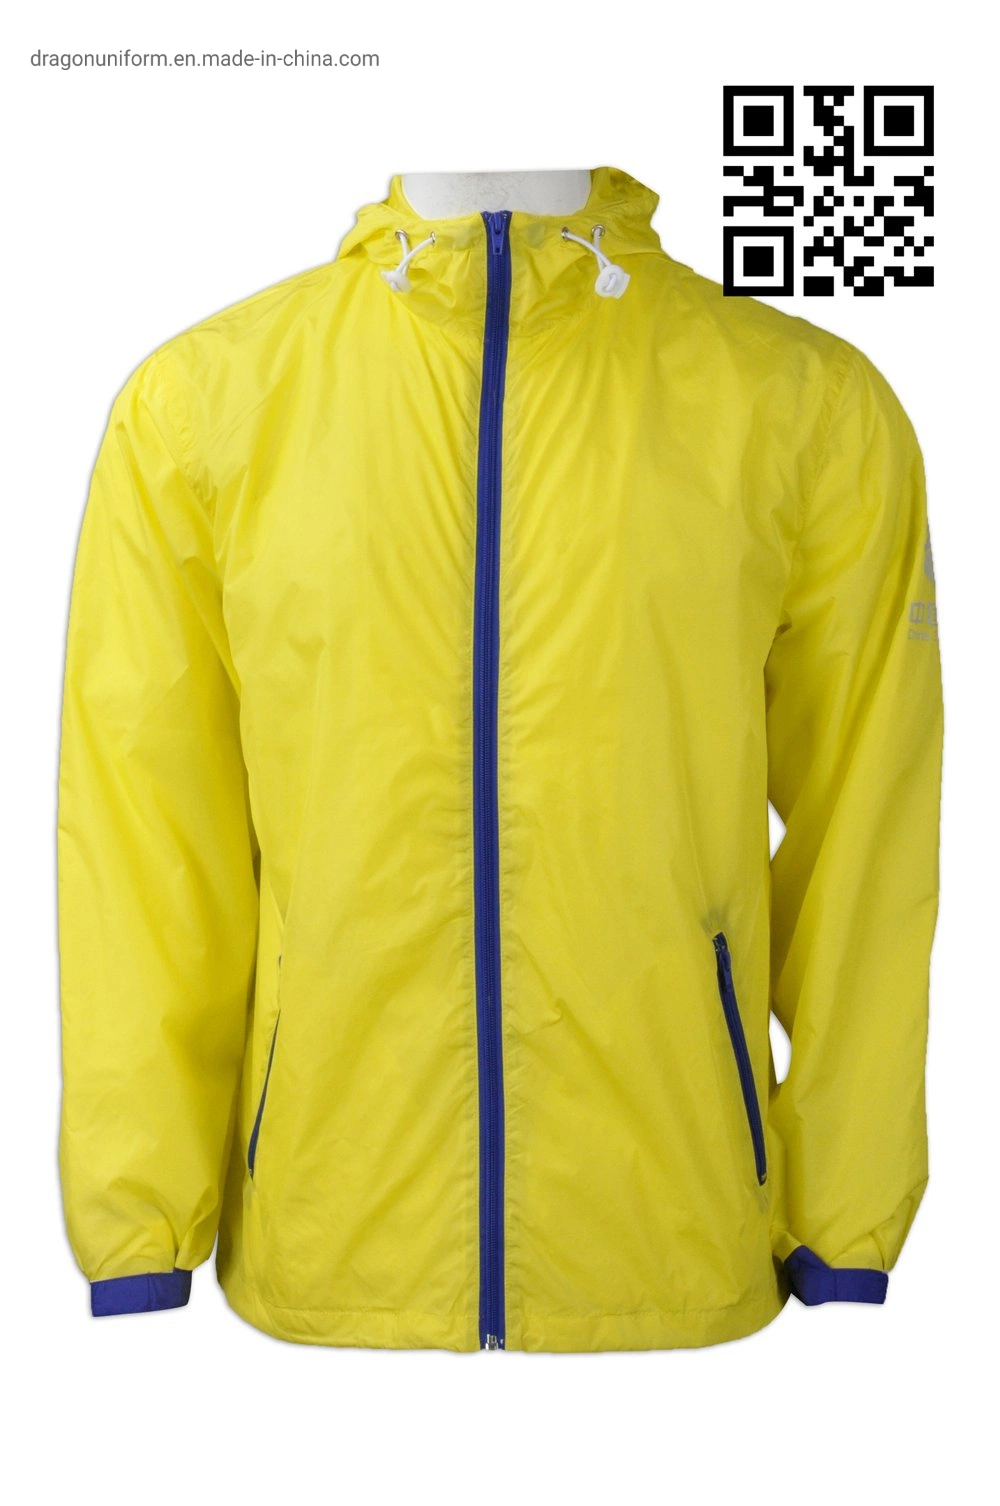 Personaliza o casaco Bomber dobrável Fashion Yellow Unixes Thin Packable